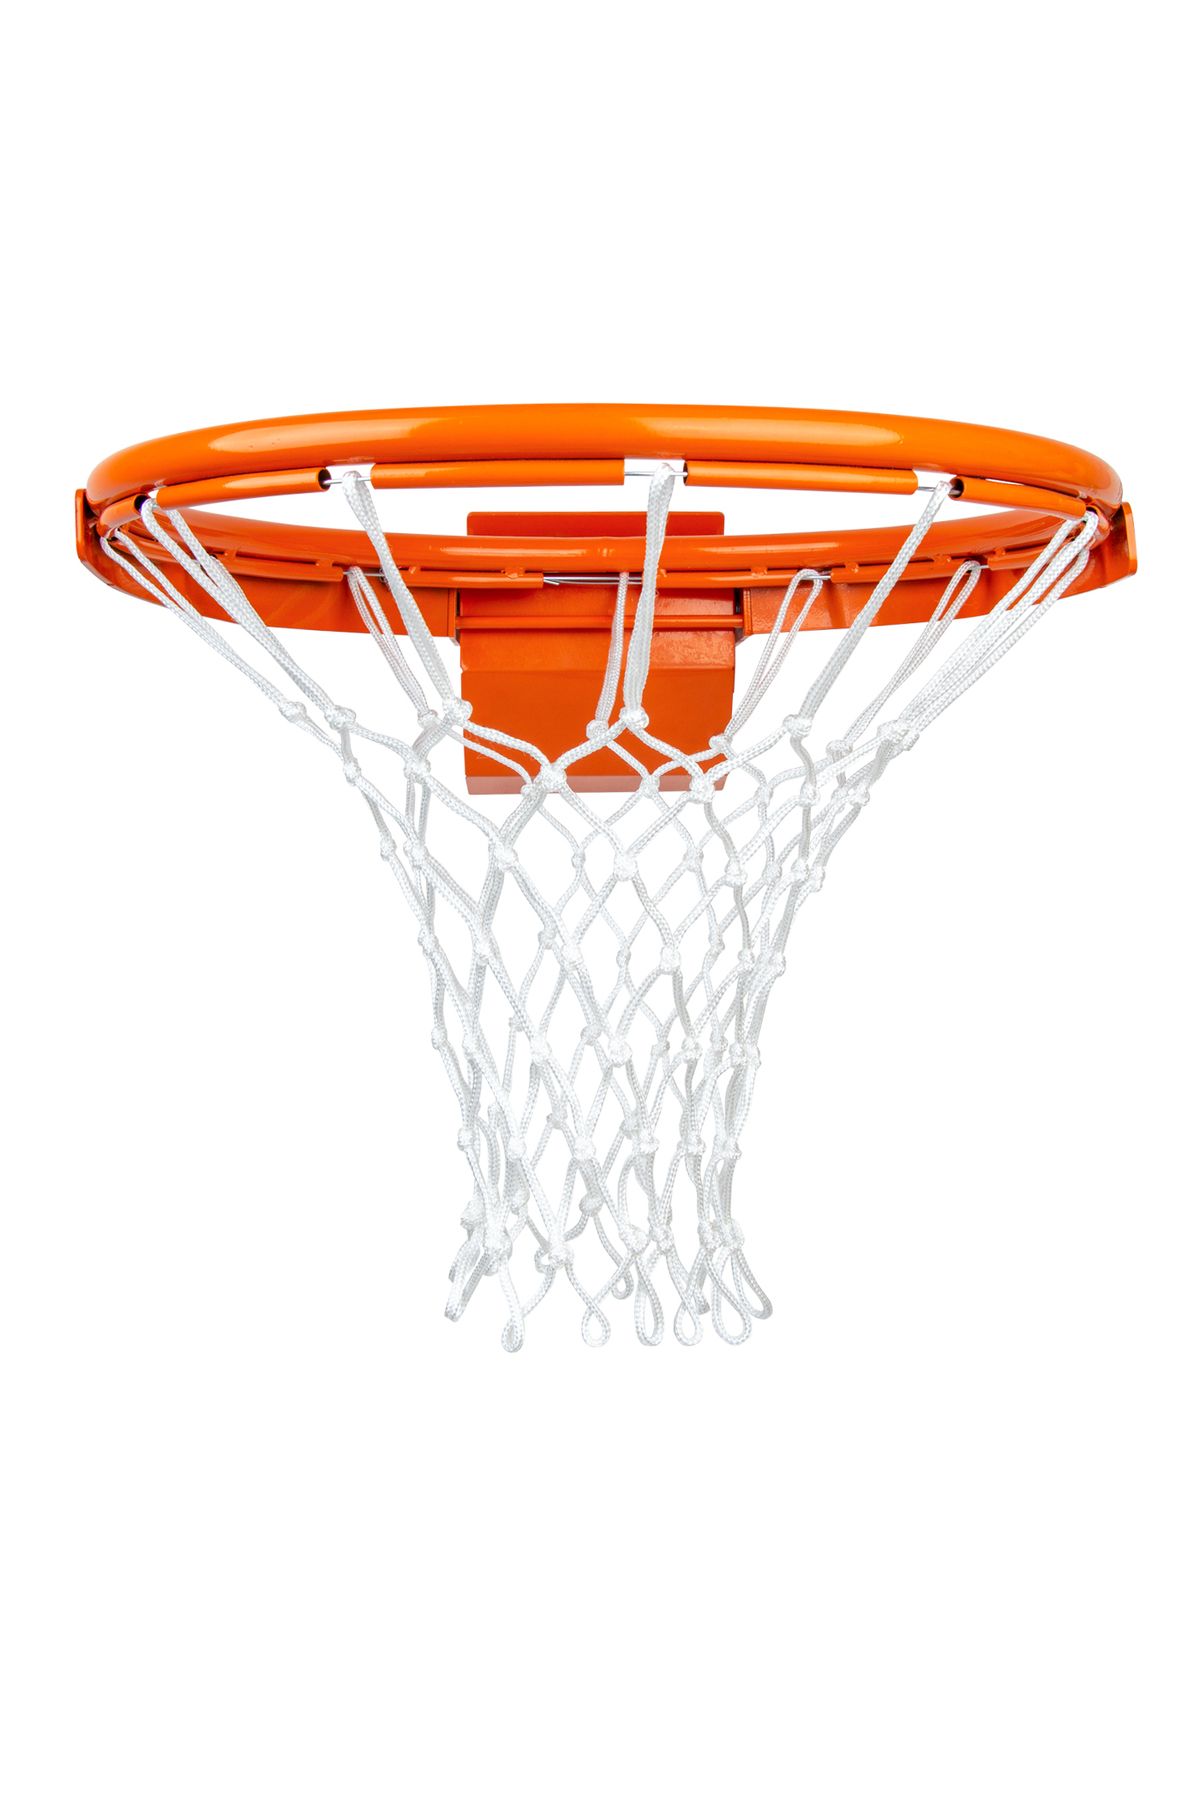 Nodes Basketbol Pota Filesi Ağı - Profesyonel - 1 Adet - Sadece File